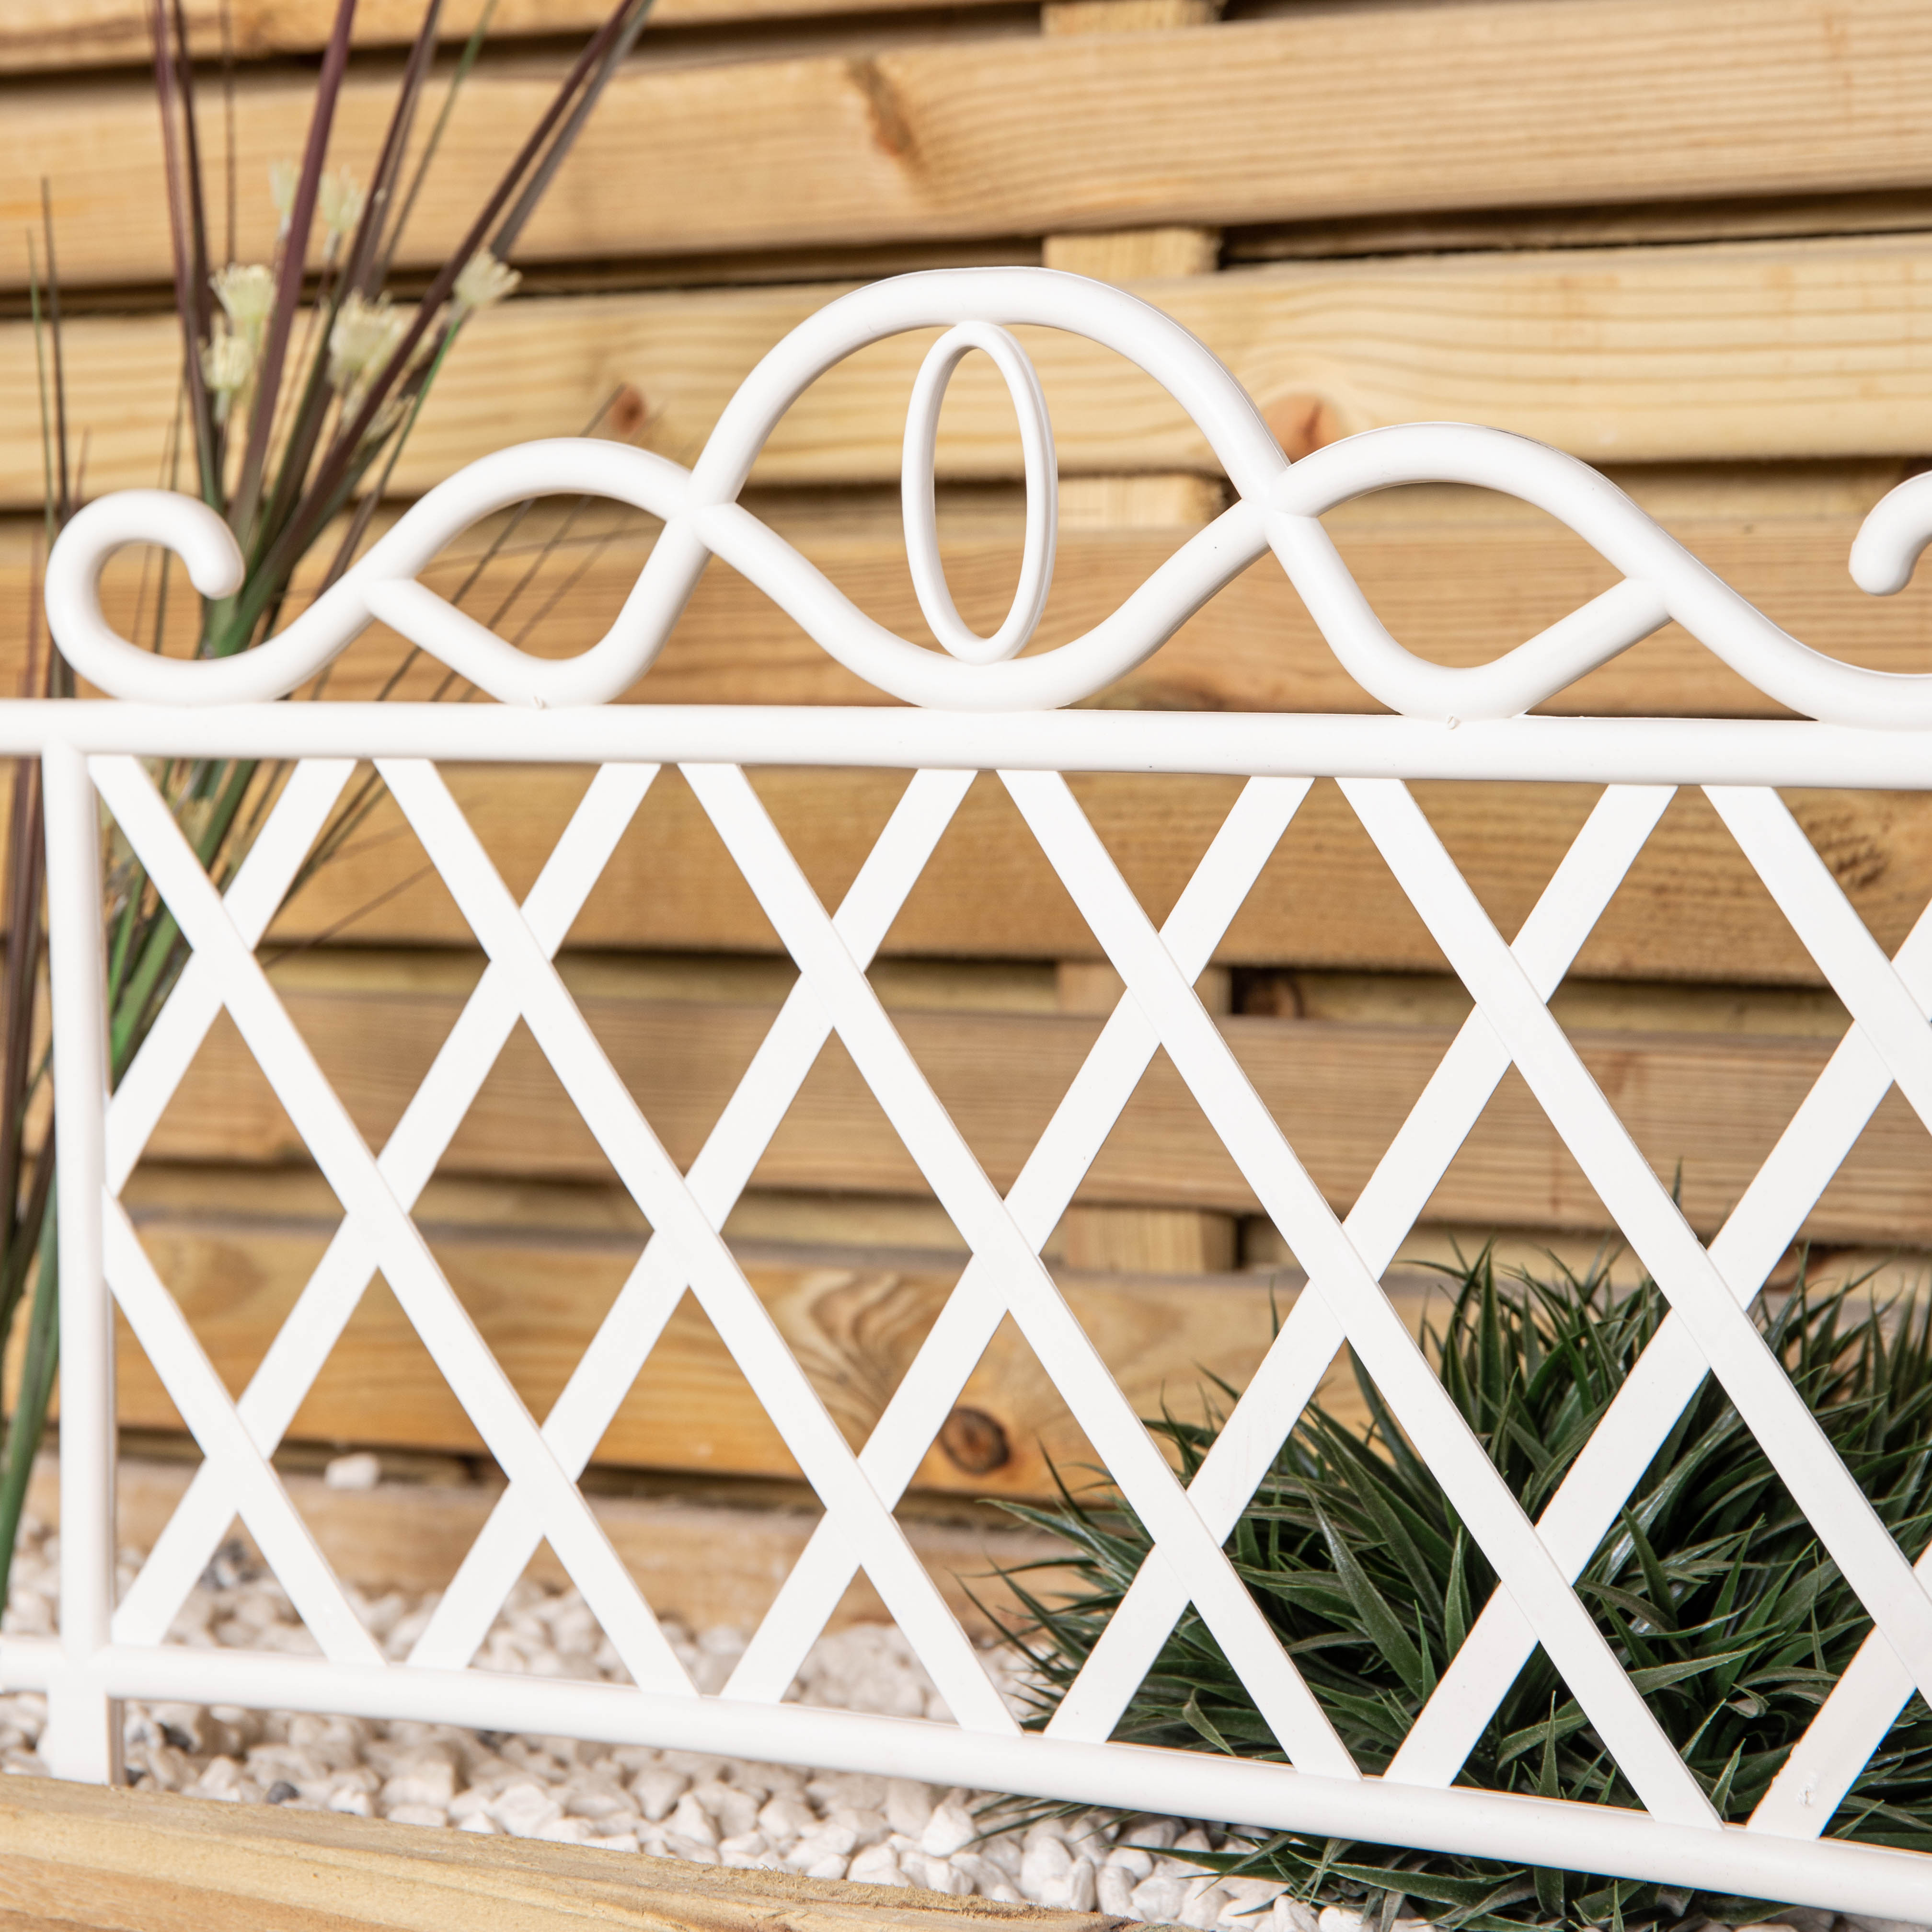 Pack of 6 27cm White Plastic Garden Patio Lawn Border Fence Edging